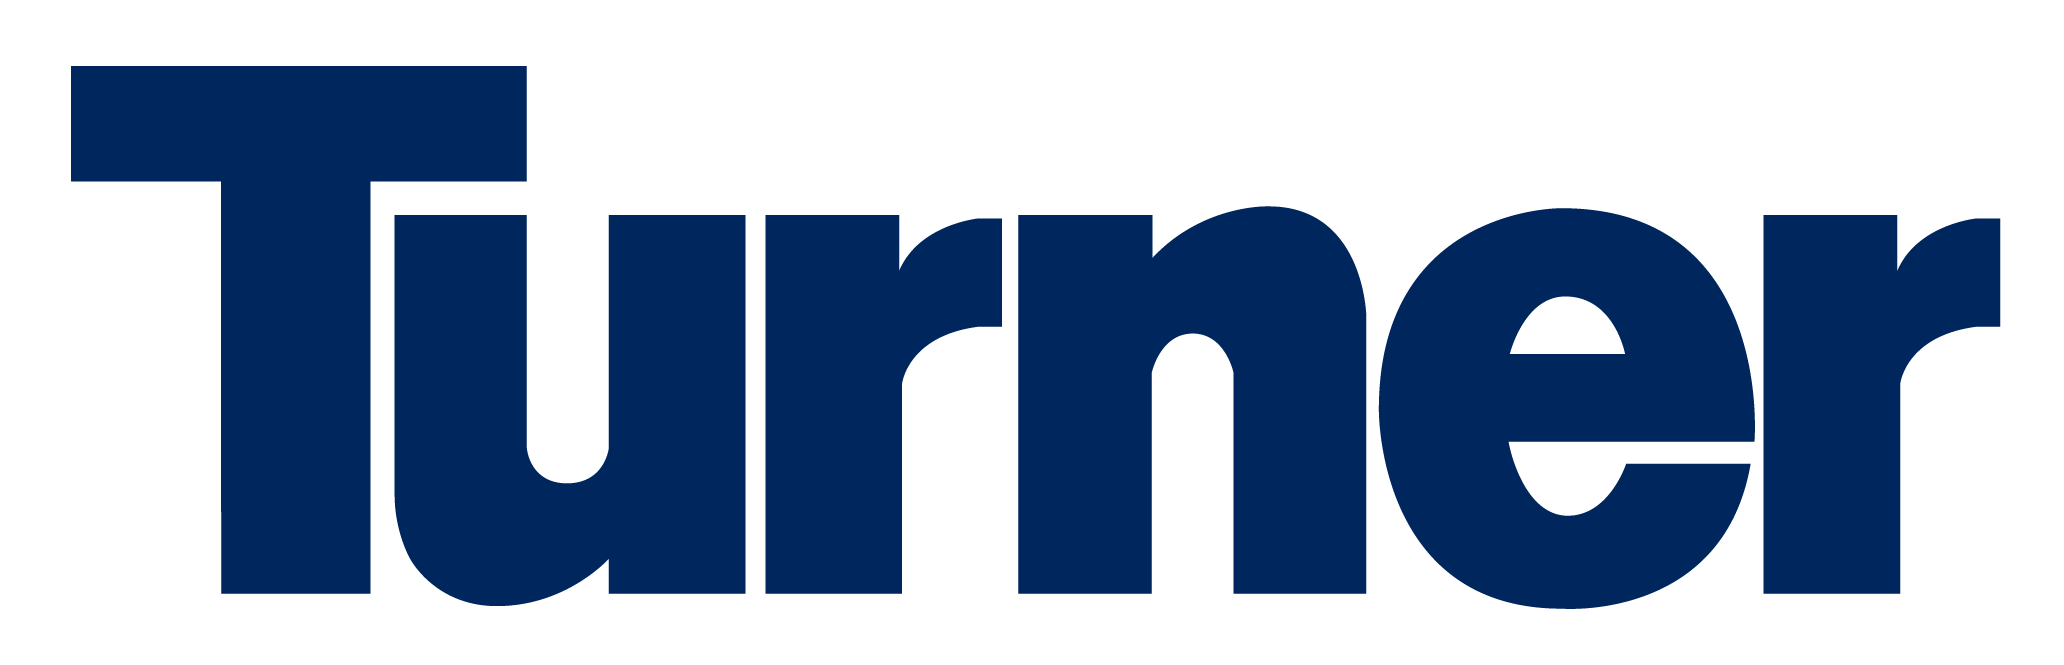 Turner Construction Co logo